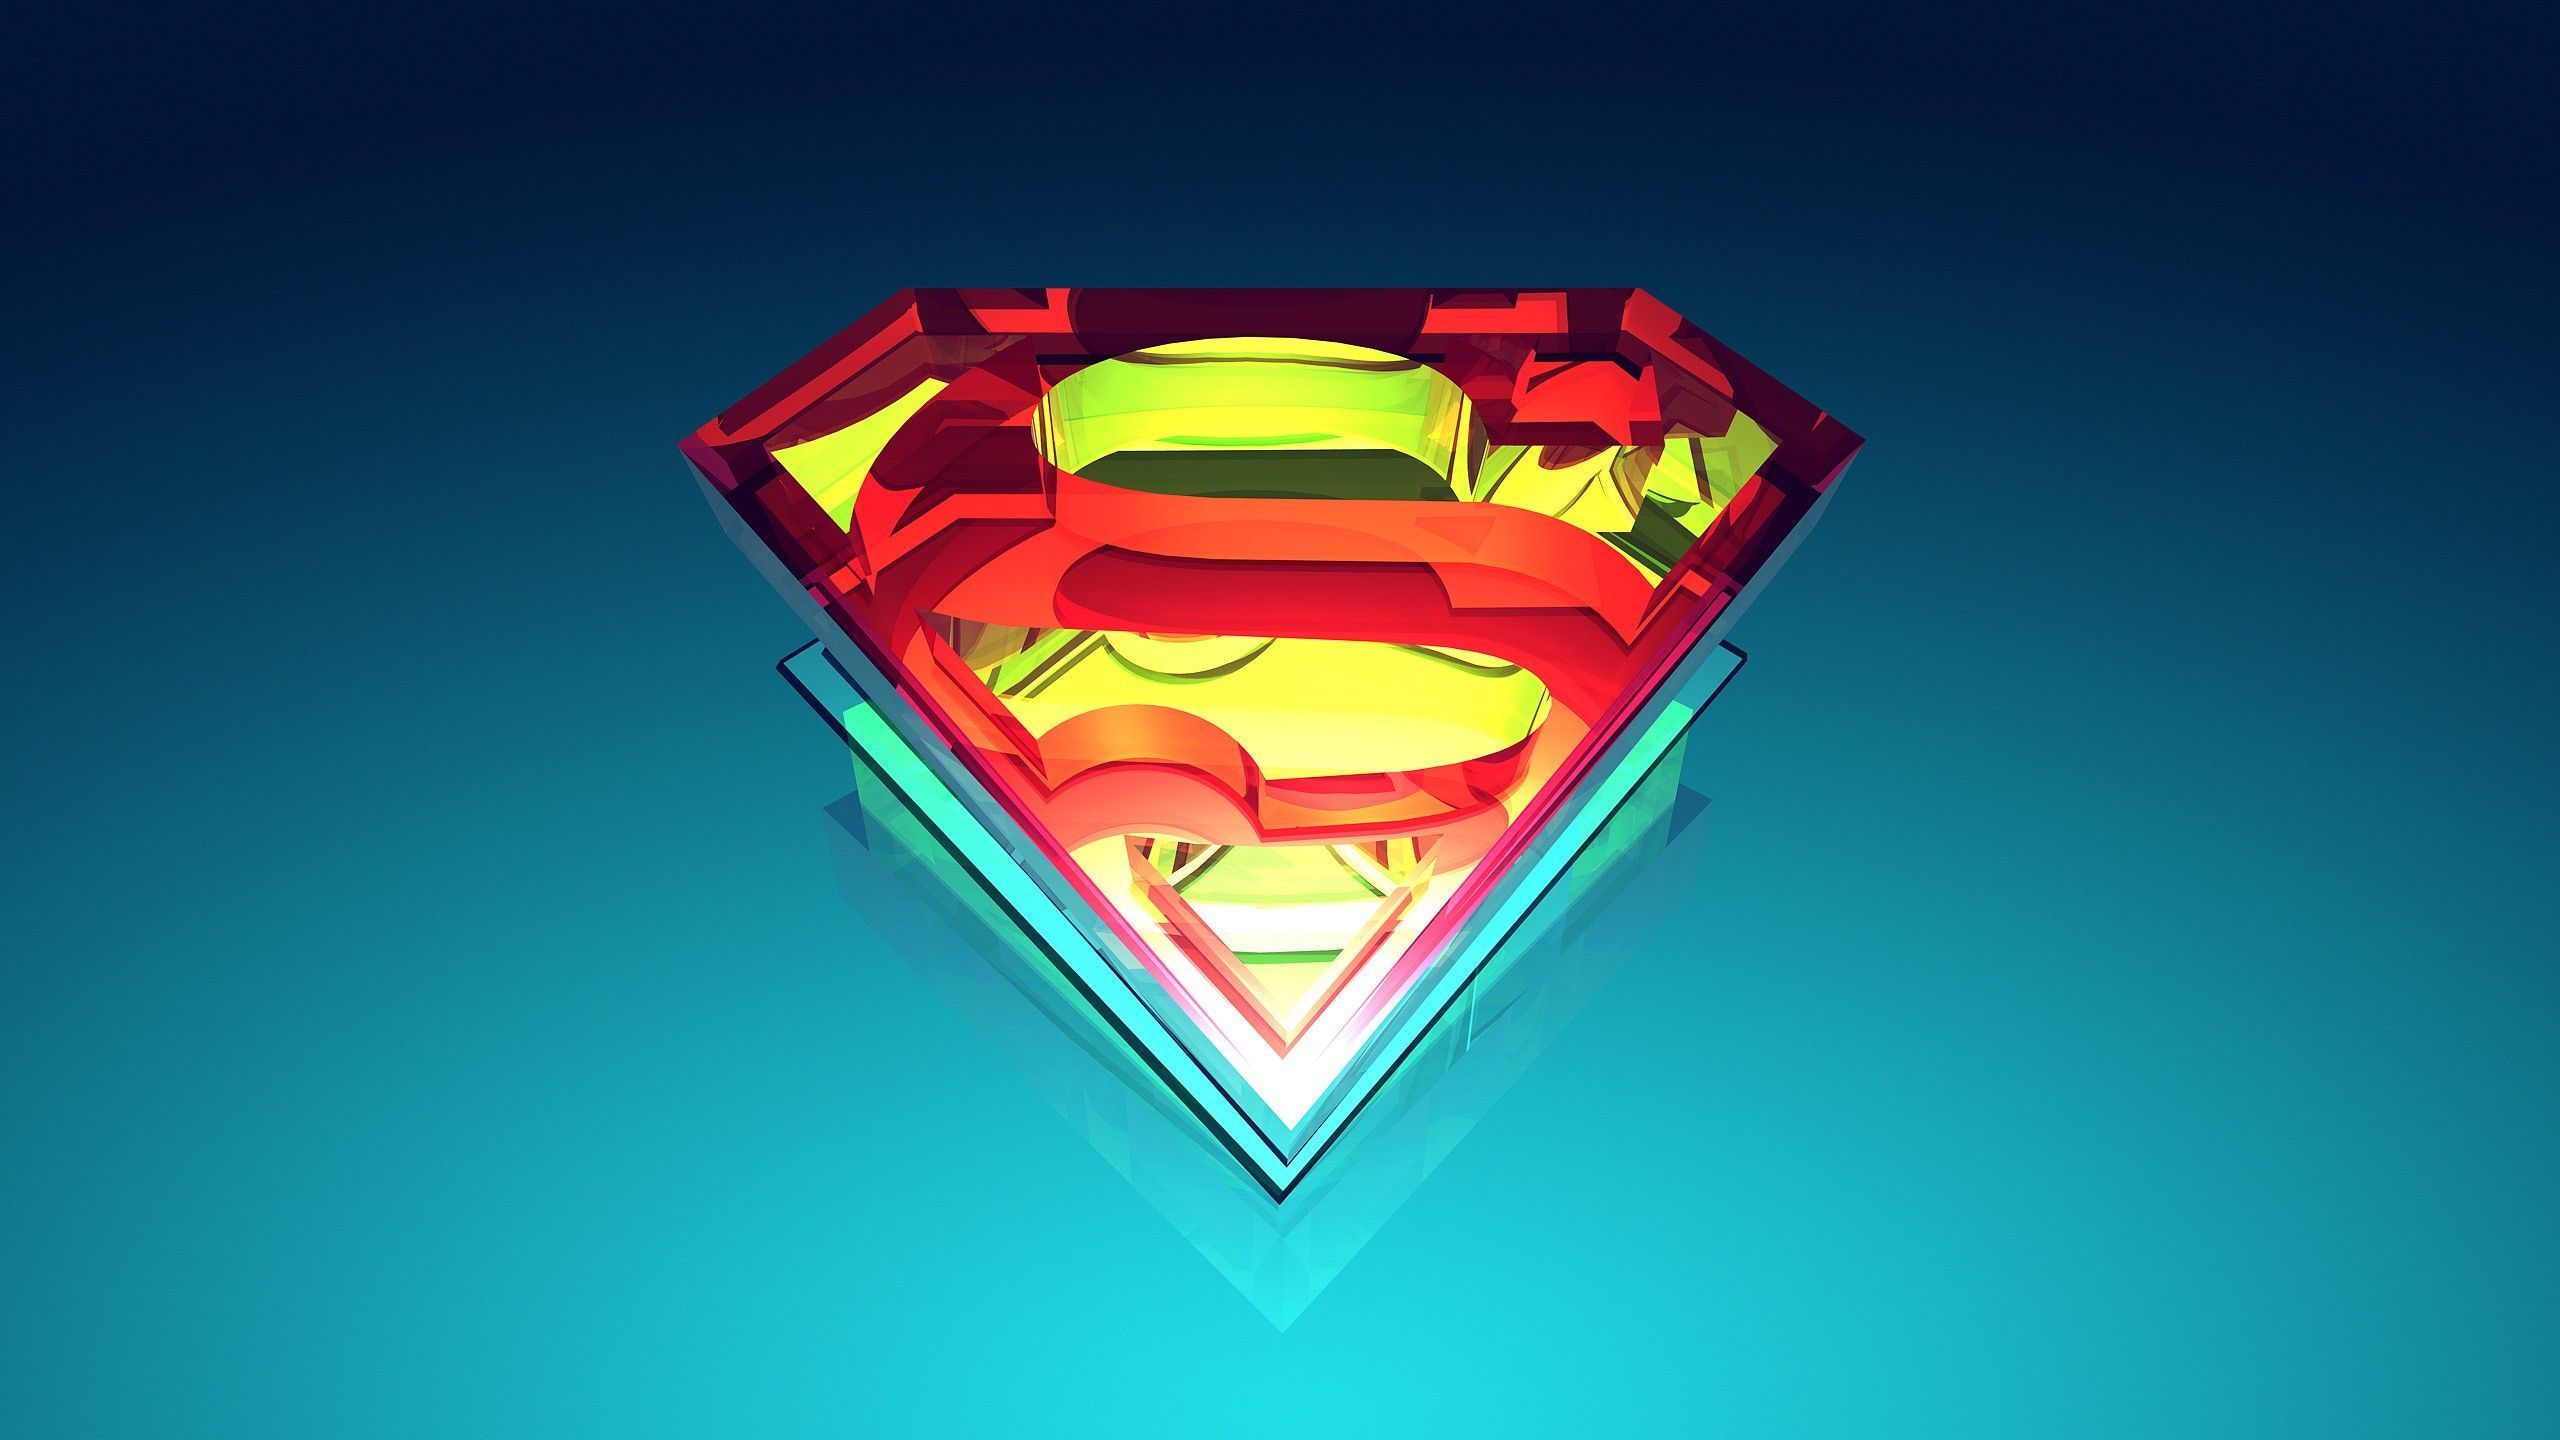 Superman Minimal Logo Wallpapers